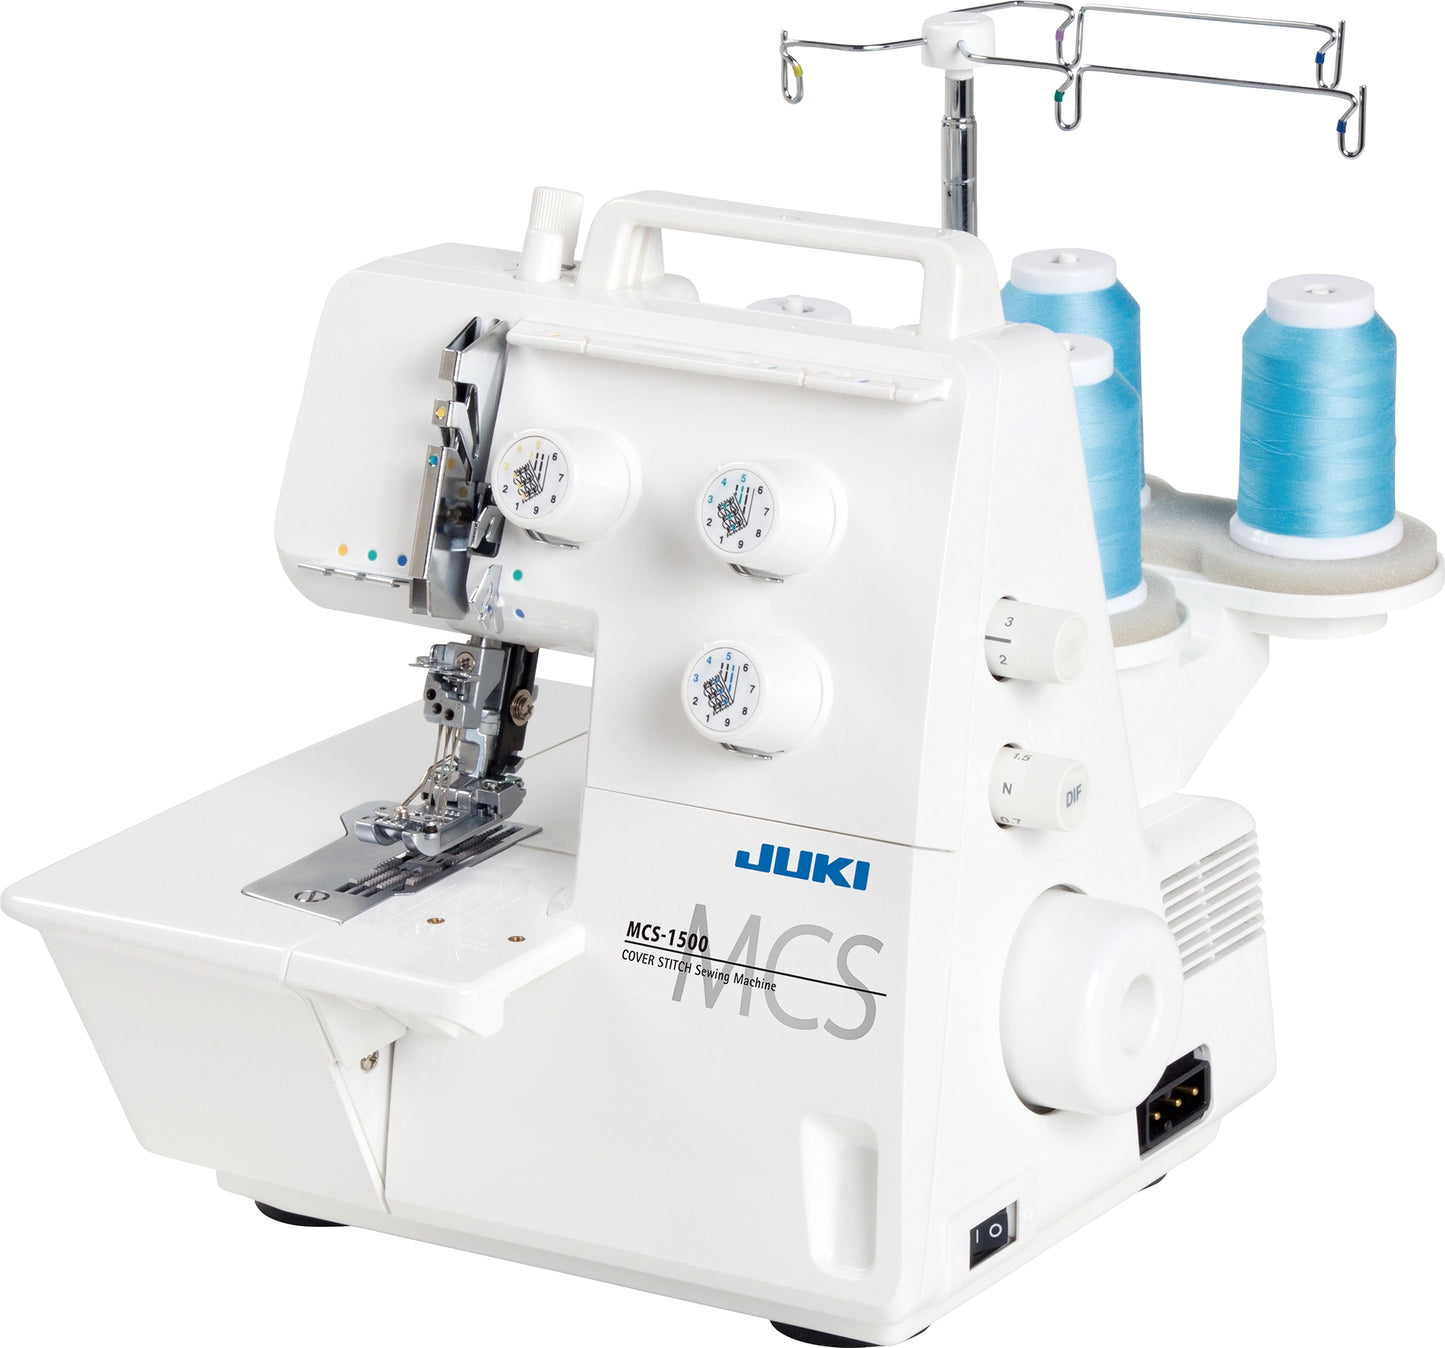 Juki MCS-1500 Cover and Chain Stitch Machine